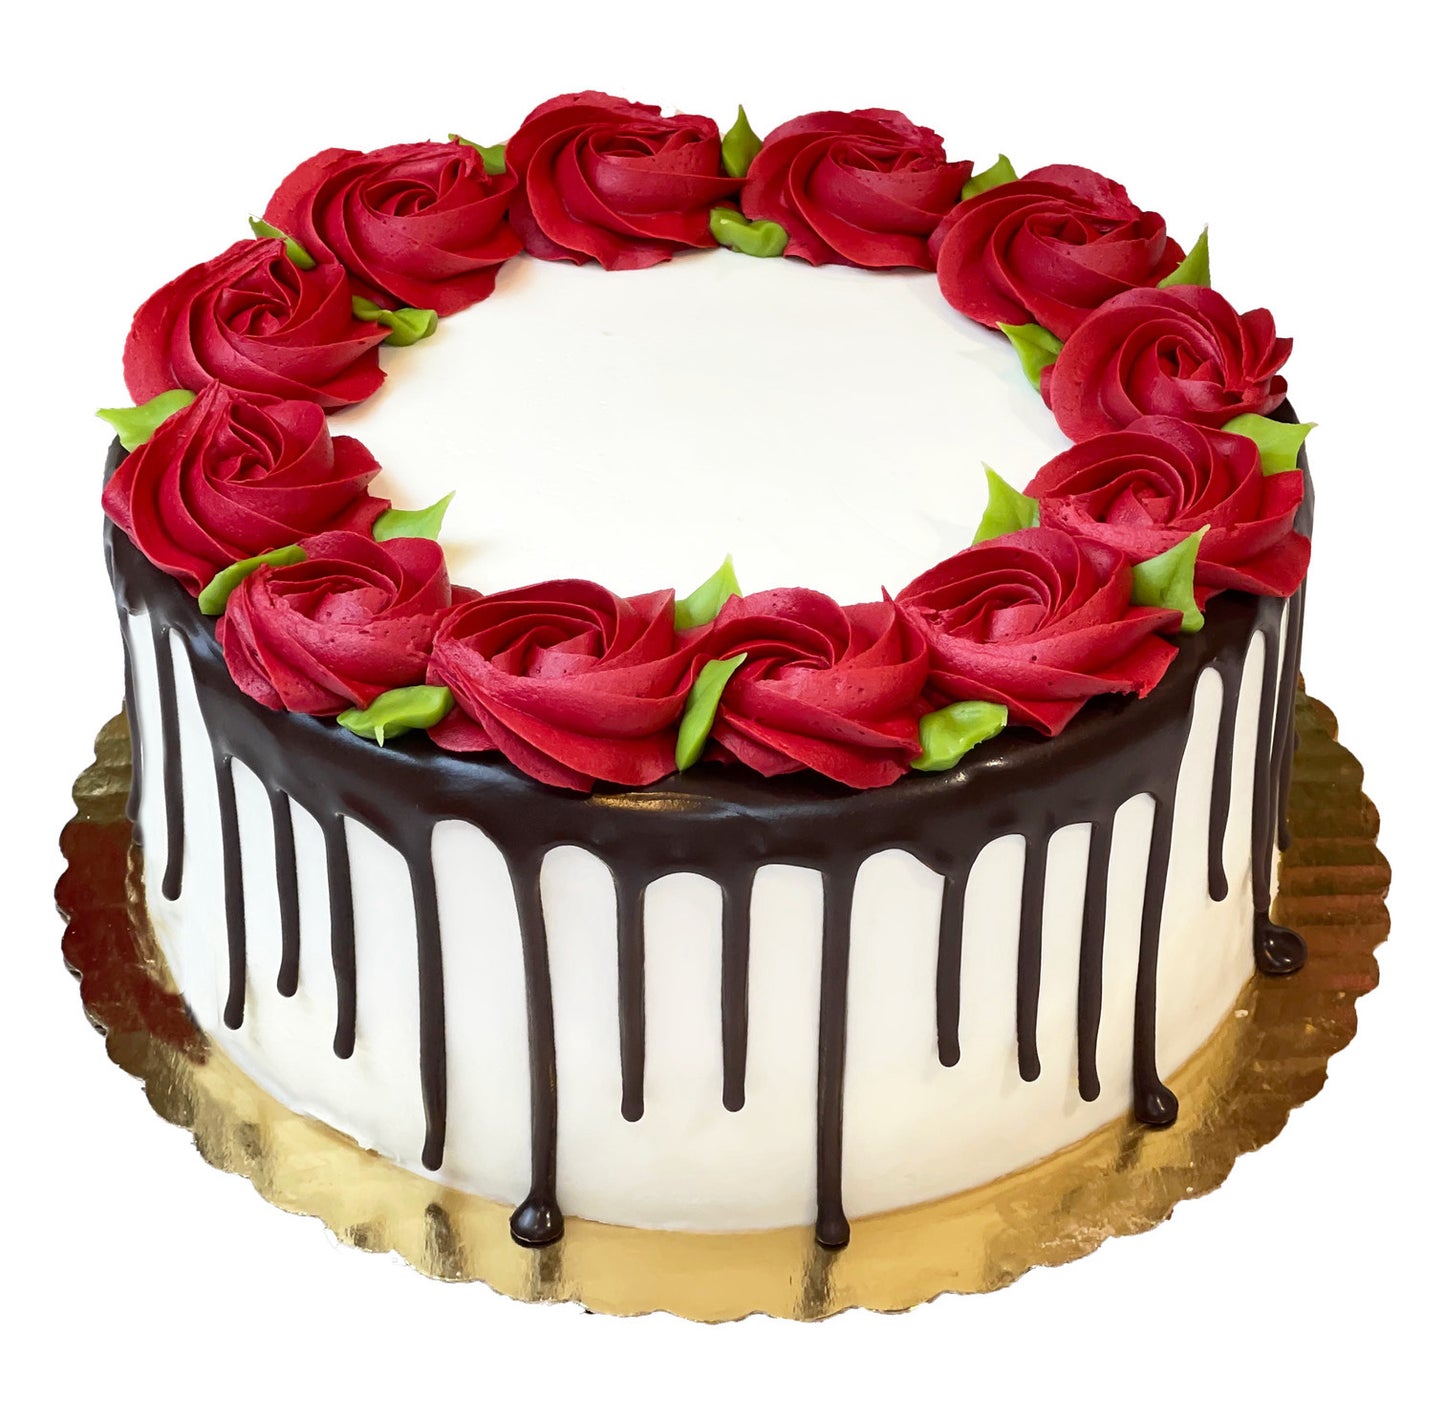 Red Roses Chocolate Drip Cake